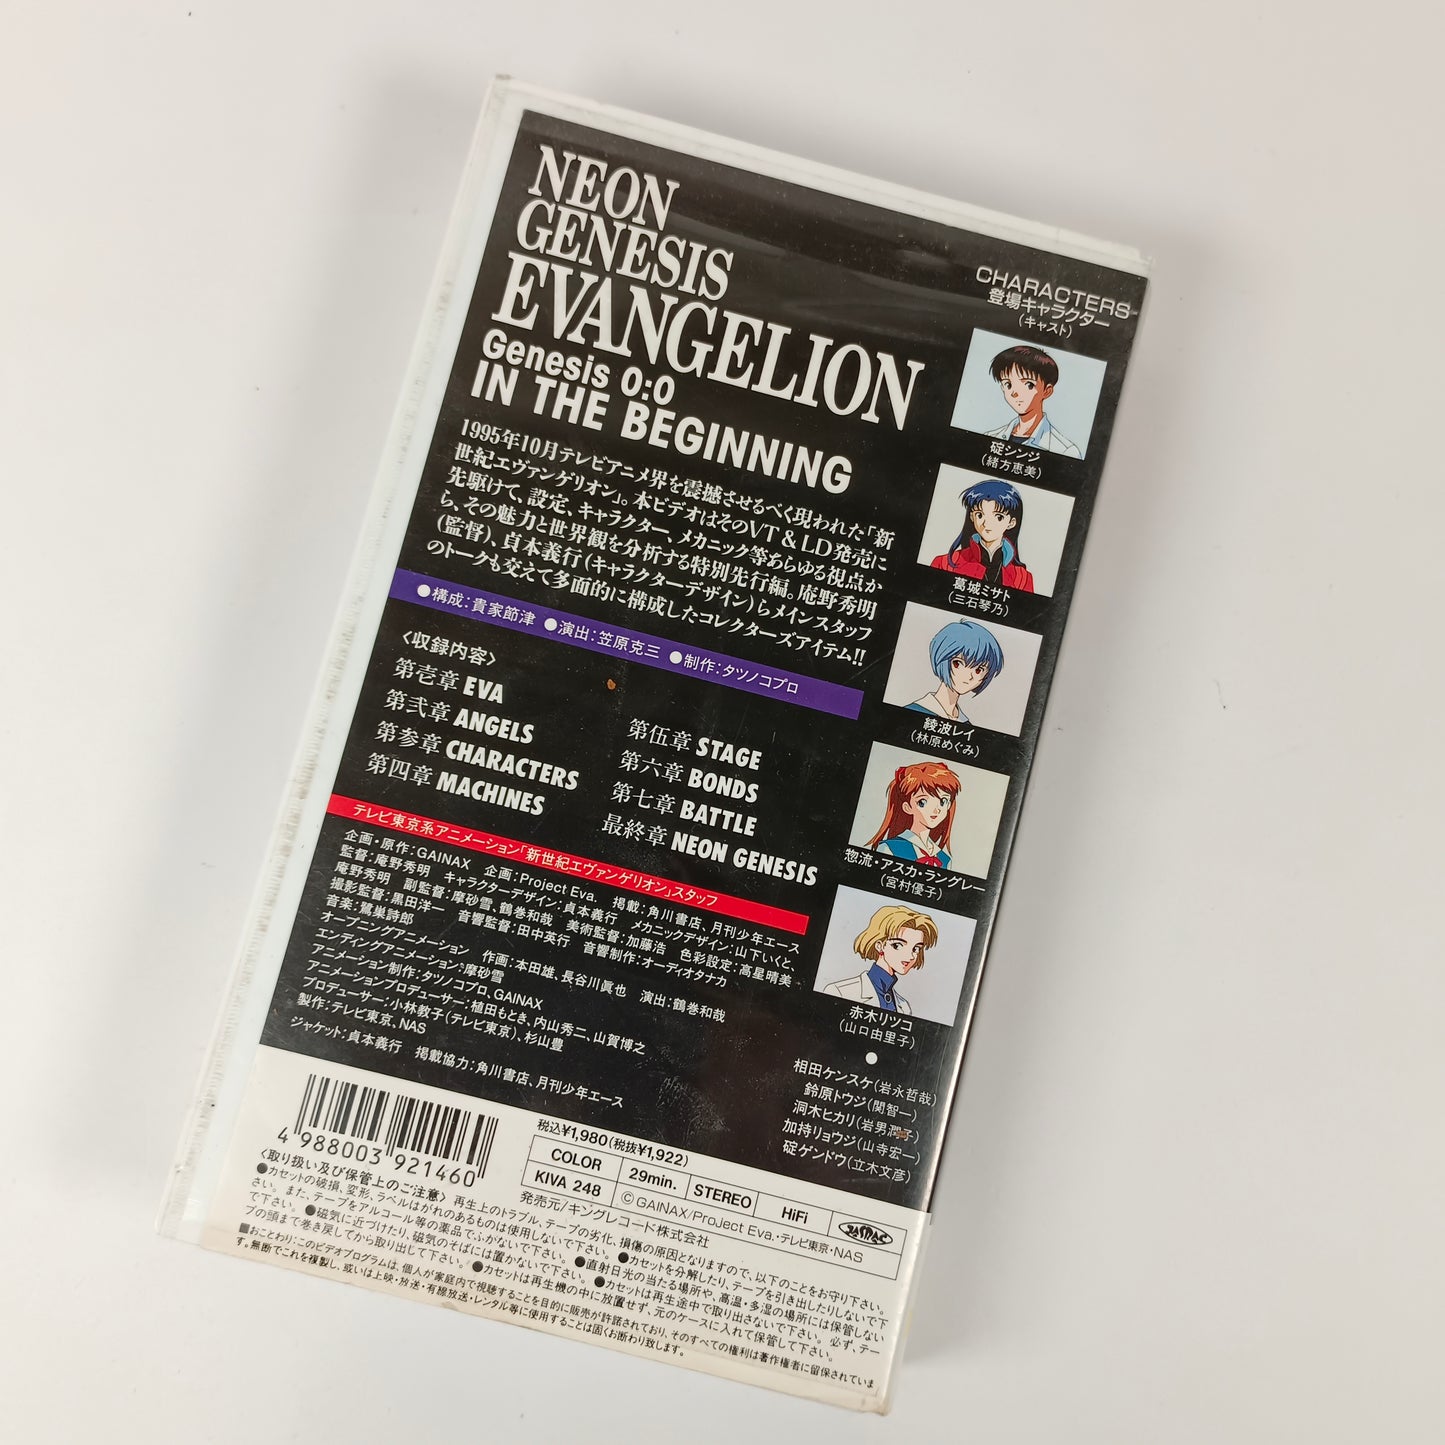 Evangelion - Genesis 0.0 IN THE BEGINNING